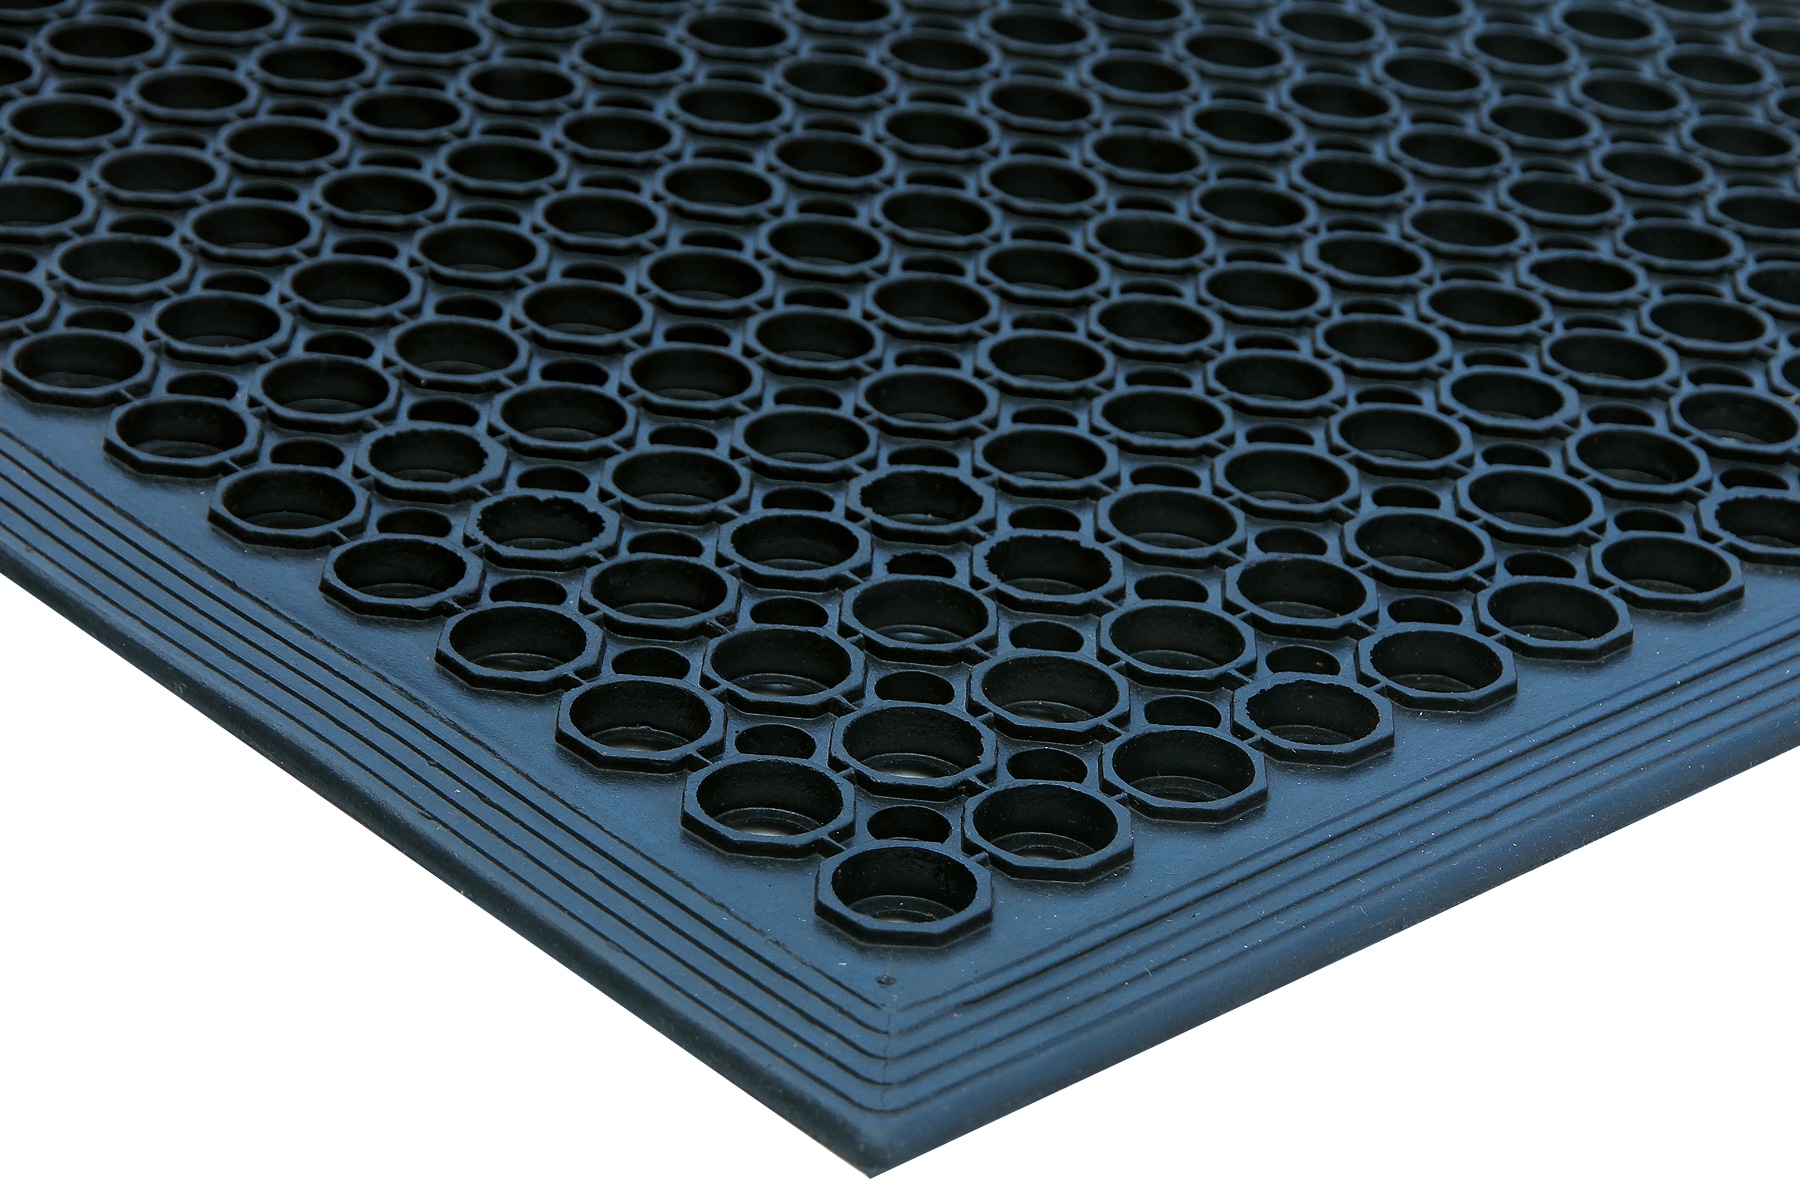 Narrow Grid - Black - 3' x 33' - Easy Wheel Roll - No  Slip/Anti-Fatigue/Drainage - Heavy Duty - PVC - Workplace Floor Mat